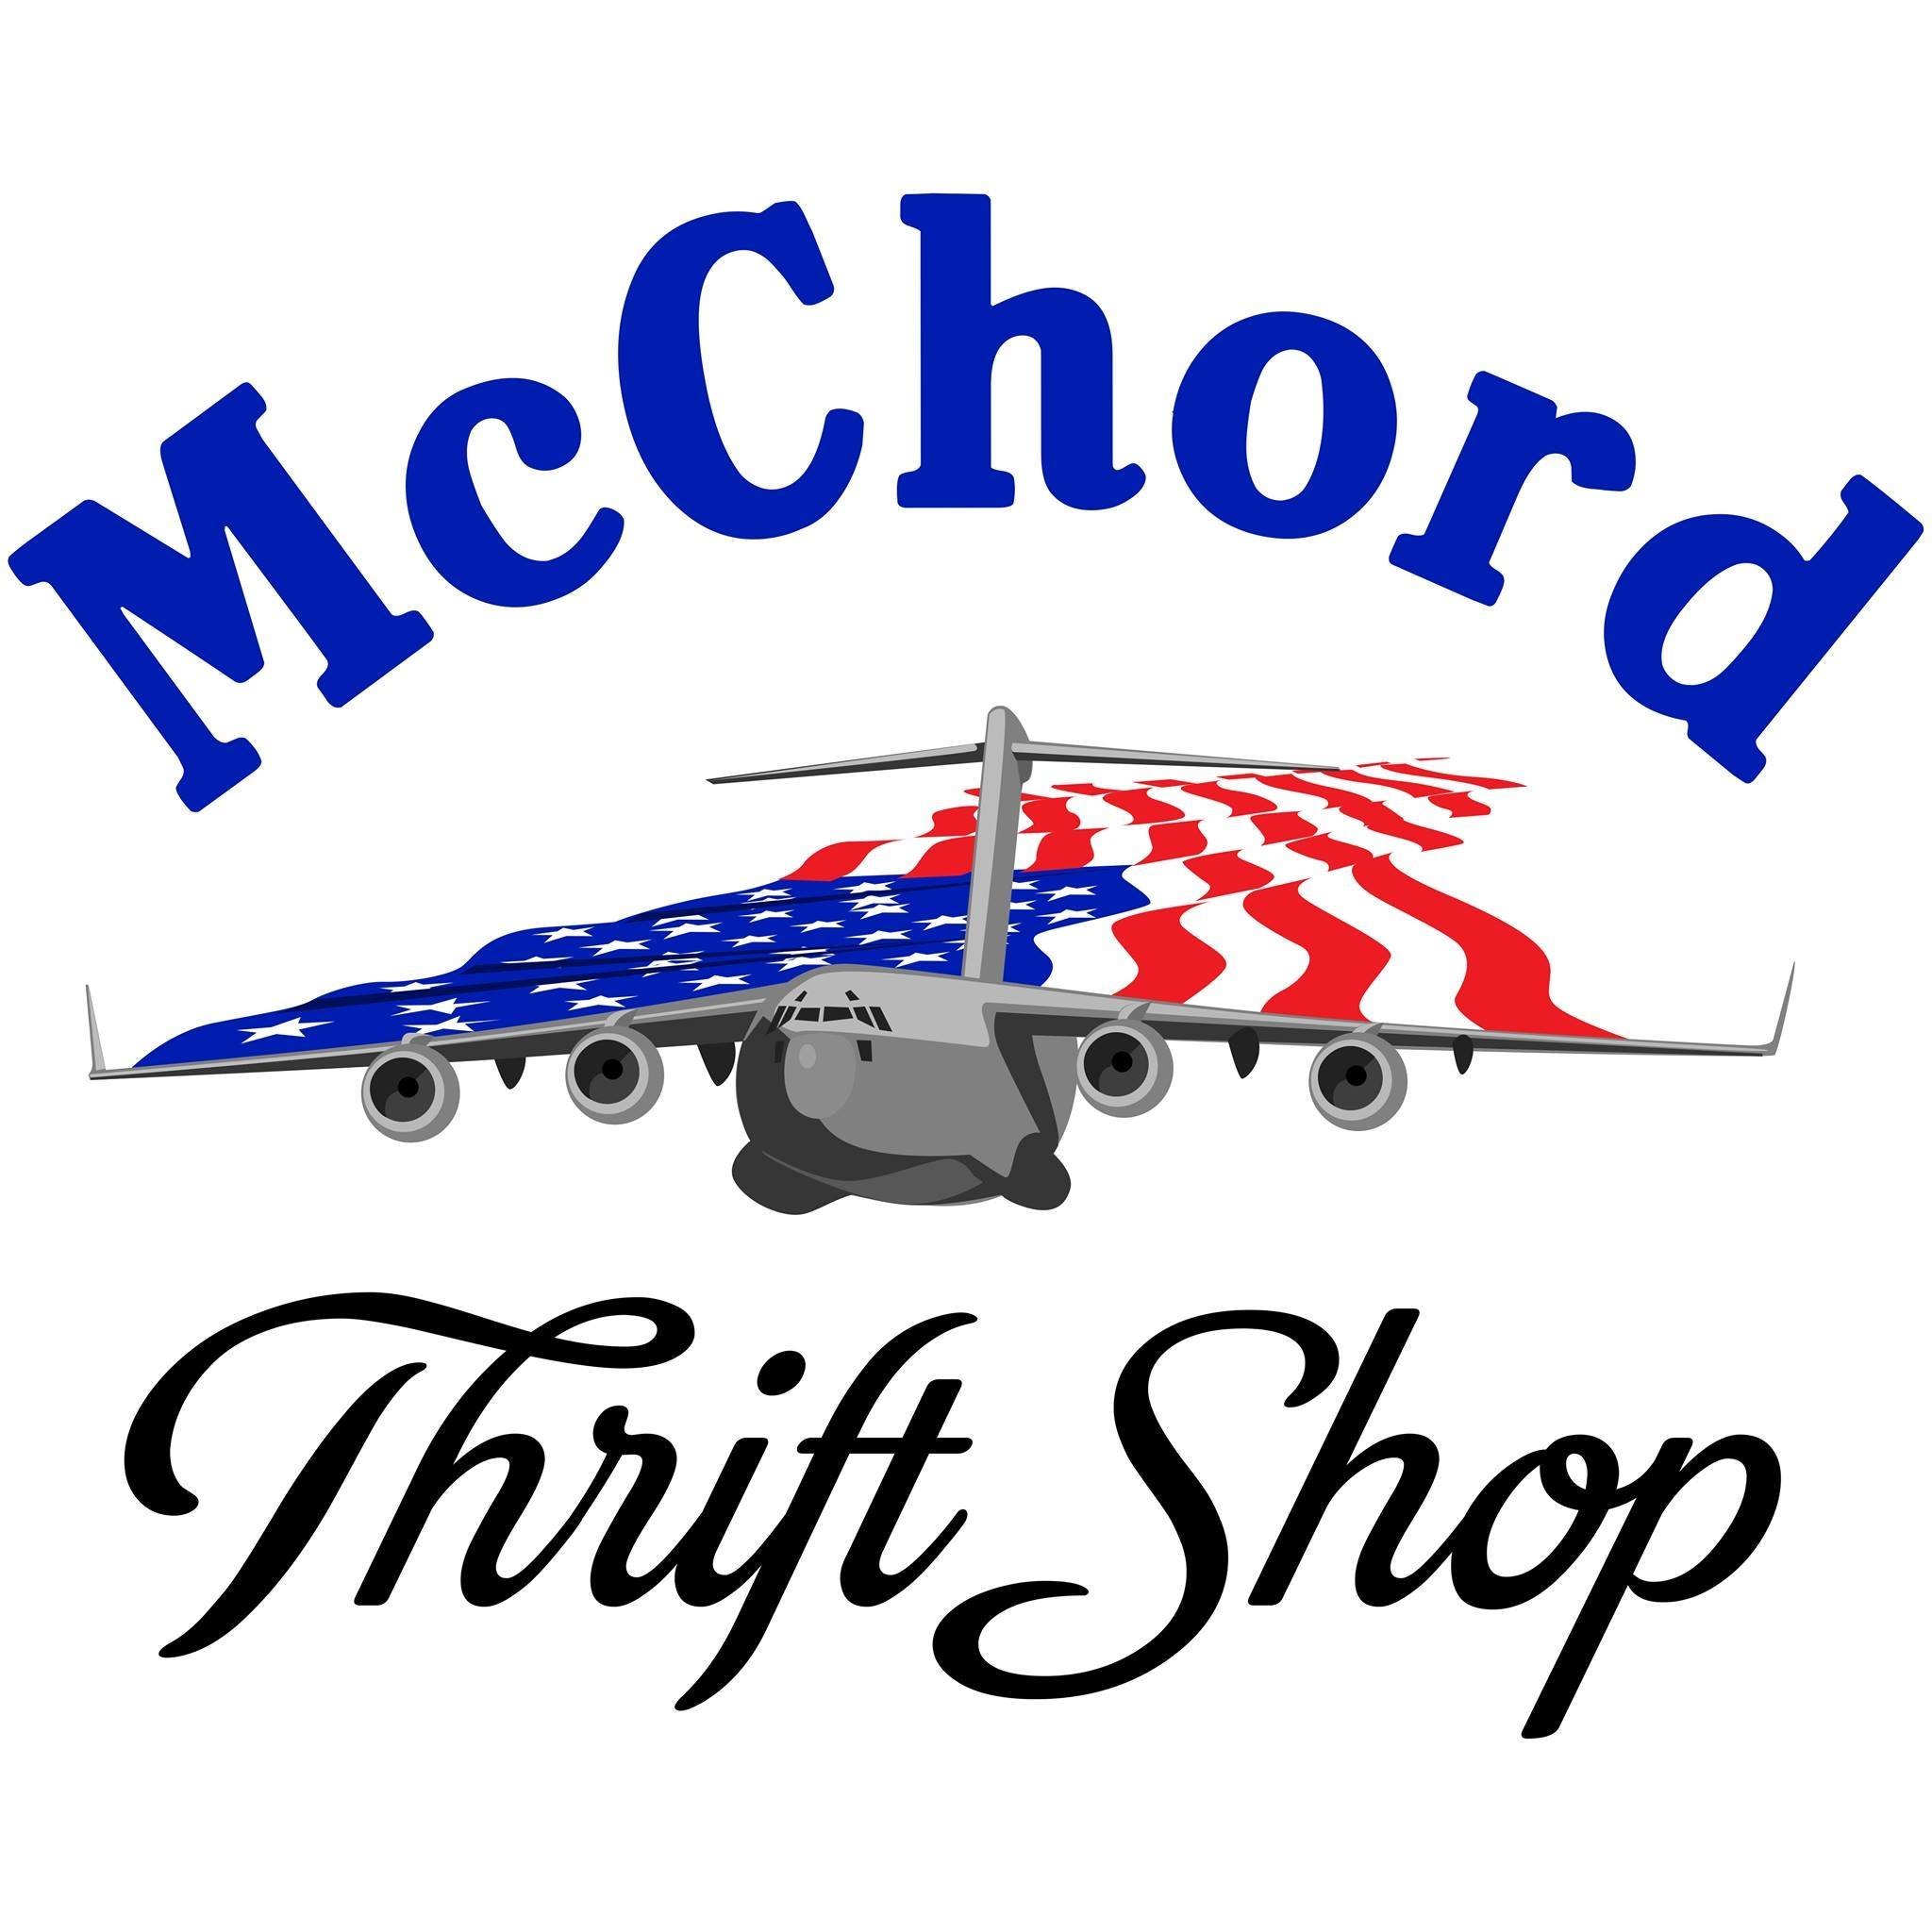 mcChord thrift shop logo.jpg